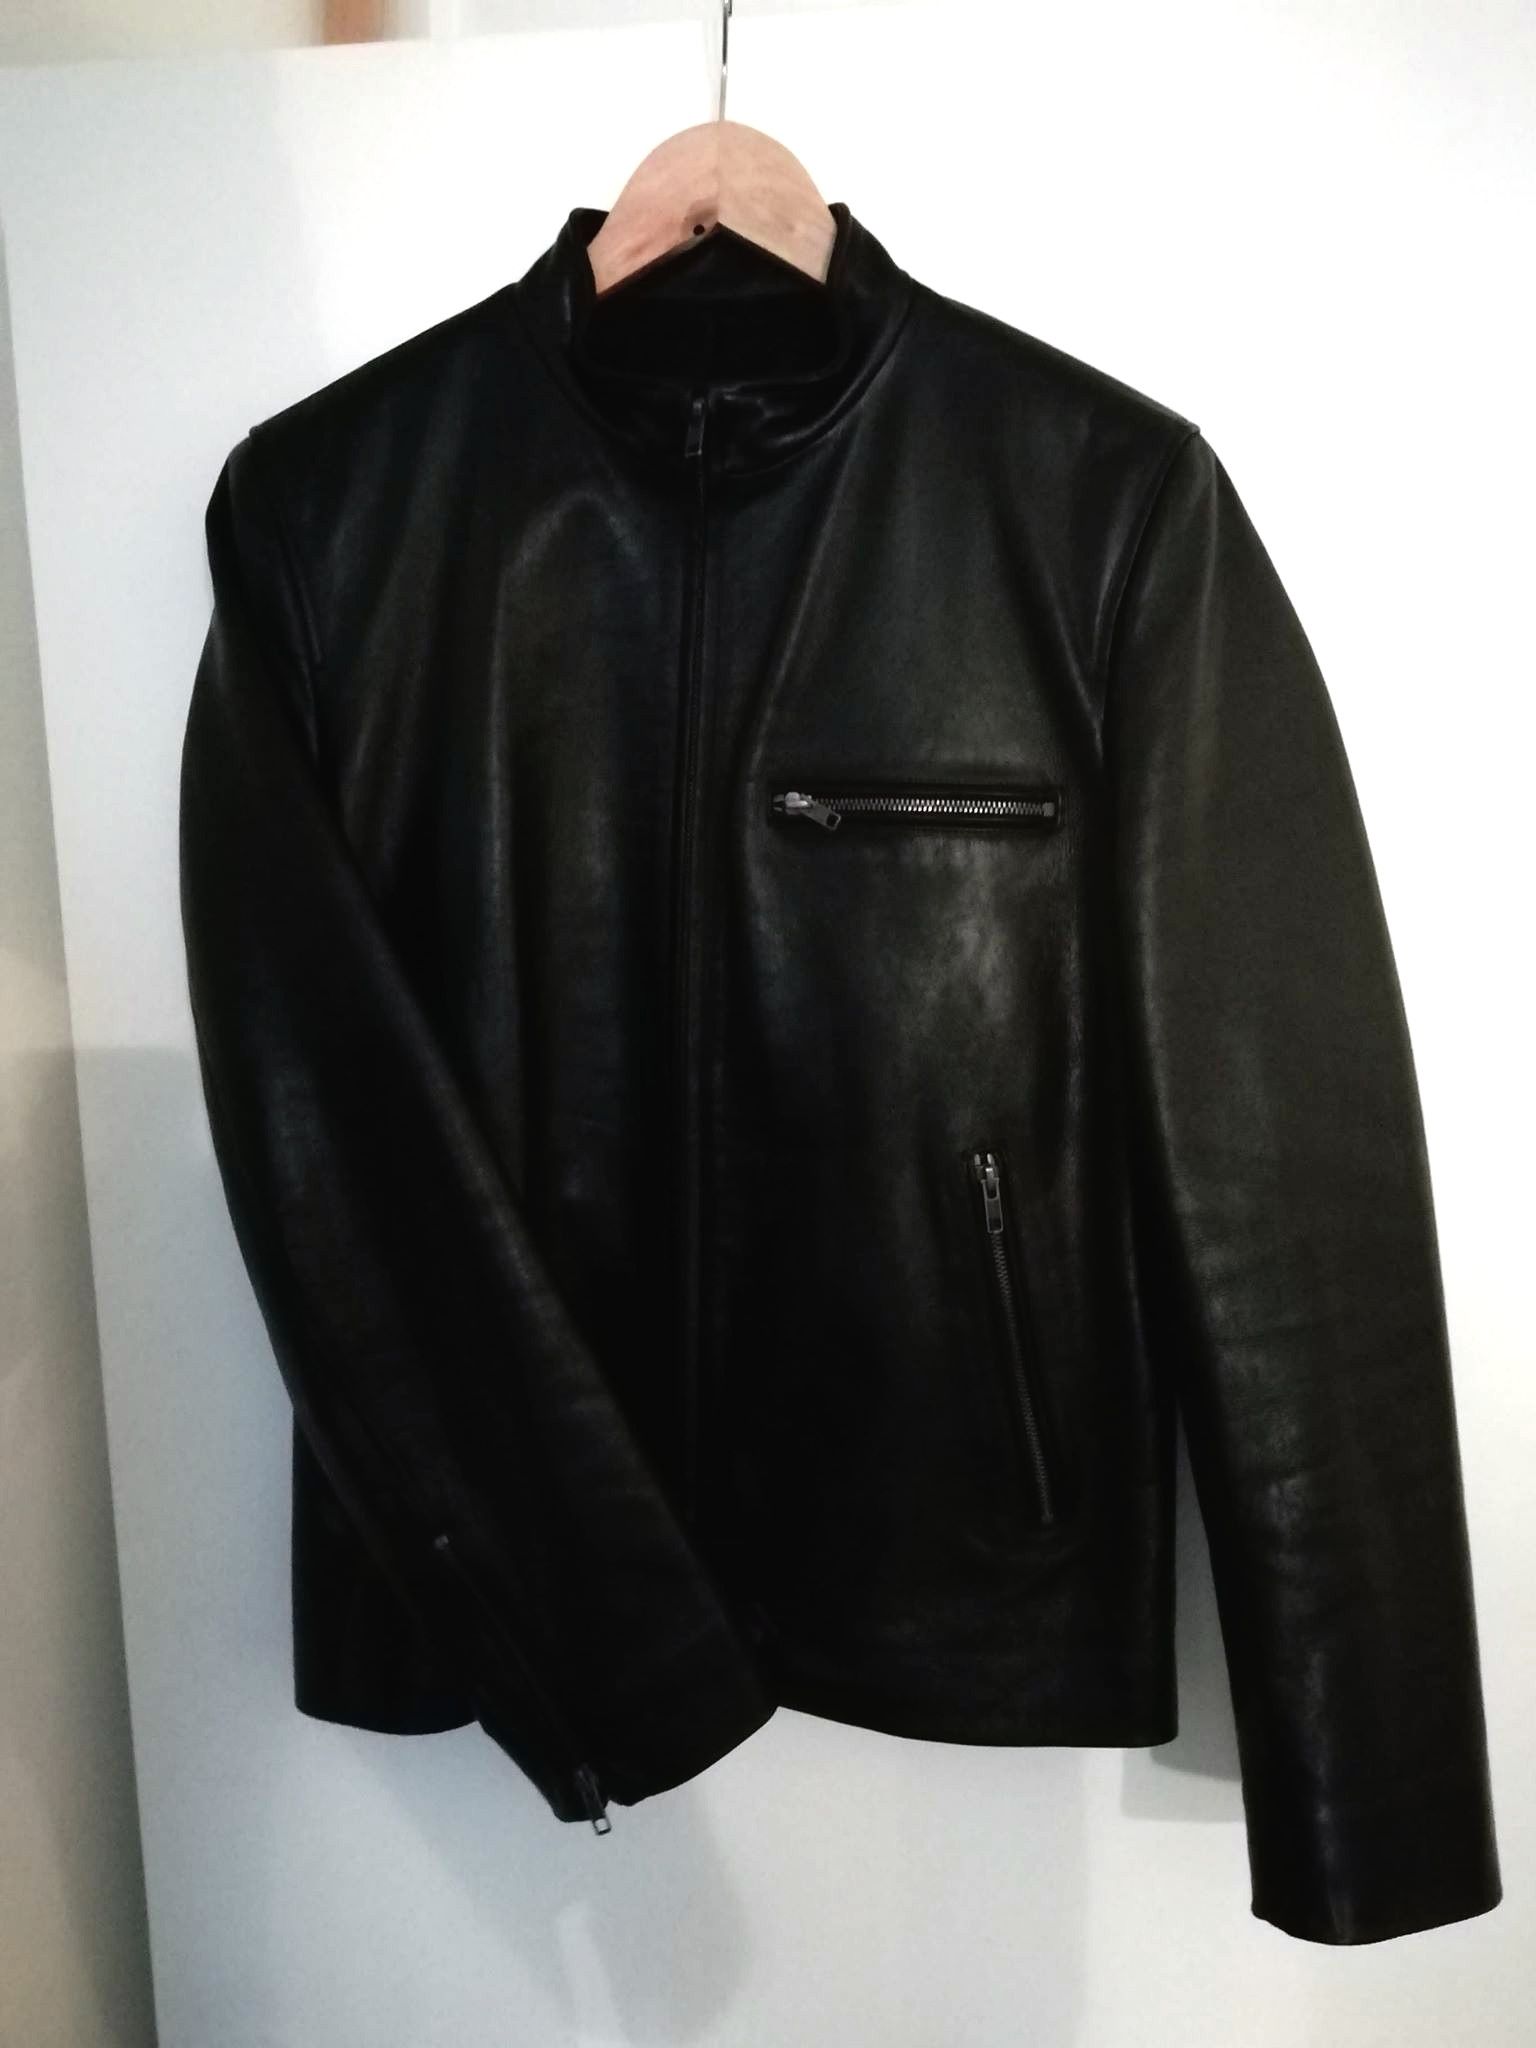 Agnes B. Leather Jacket LAST DROP | Grailed